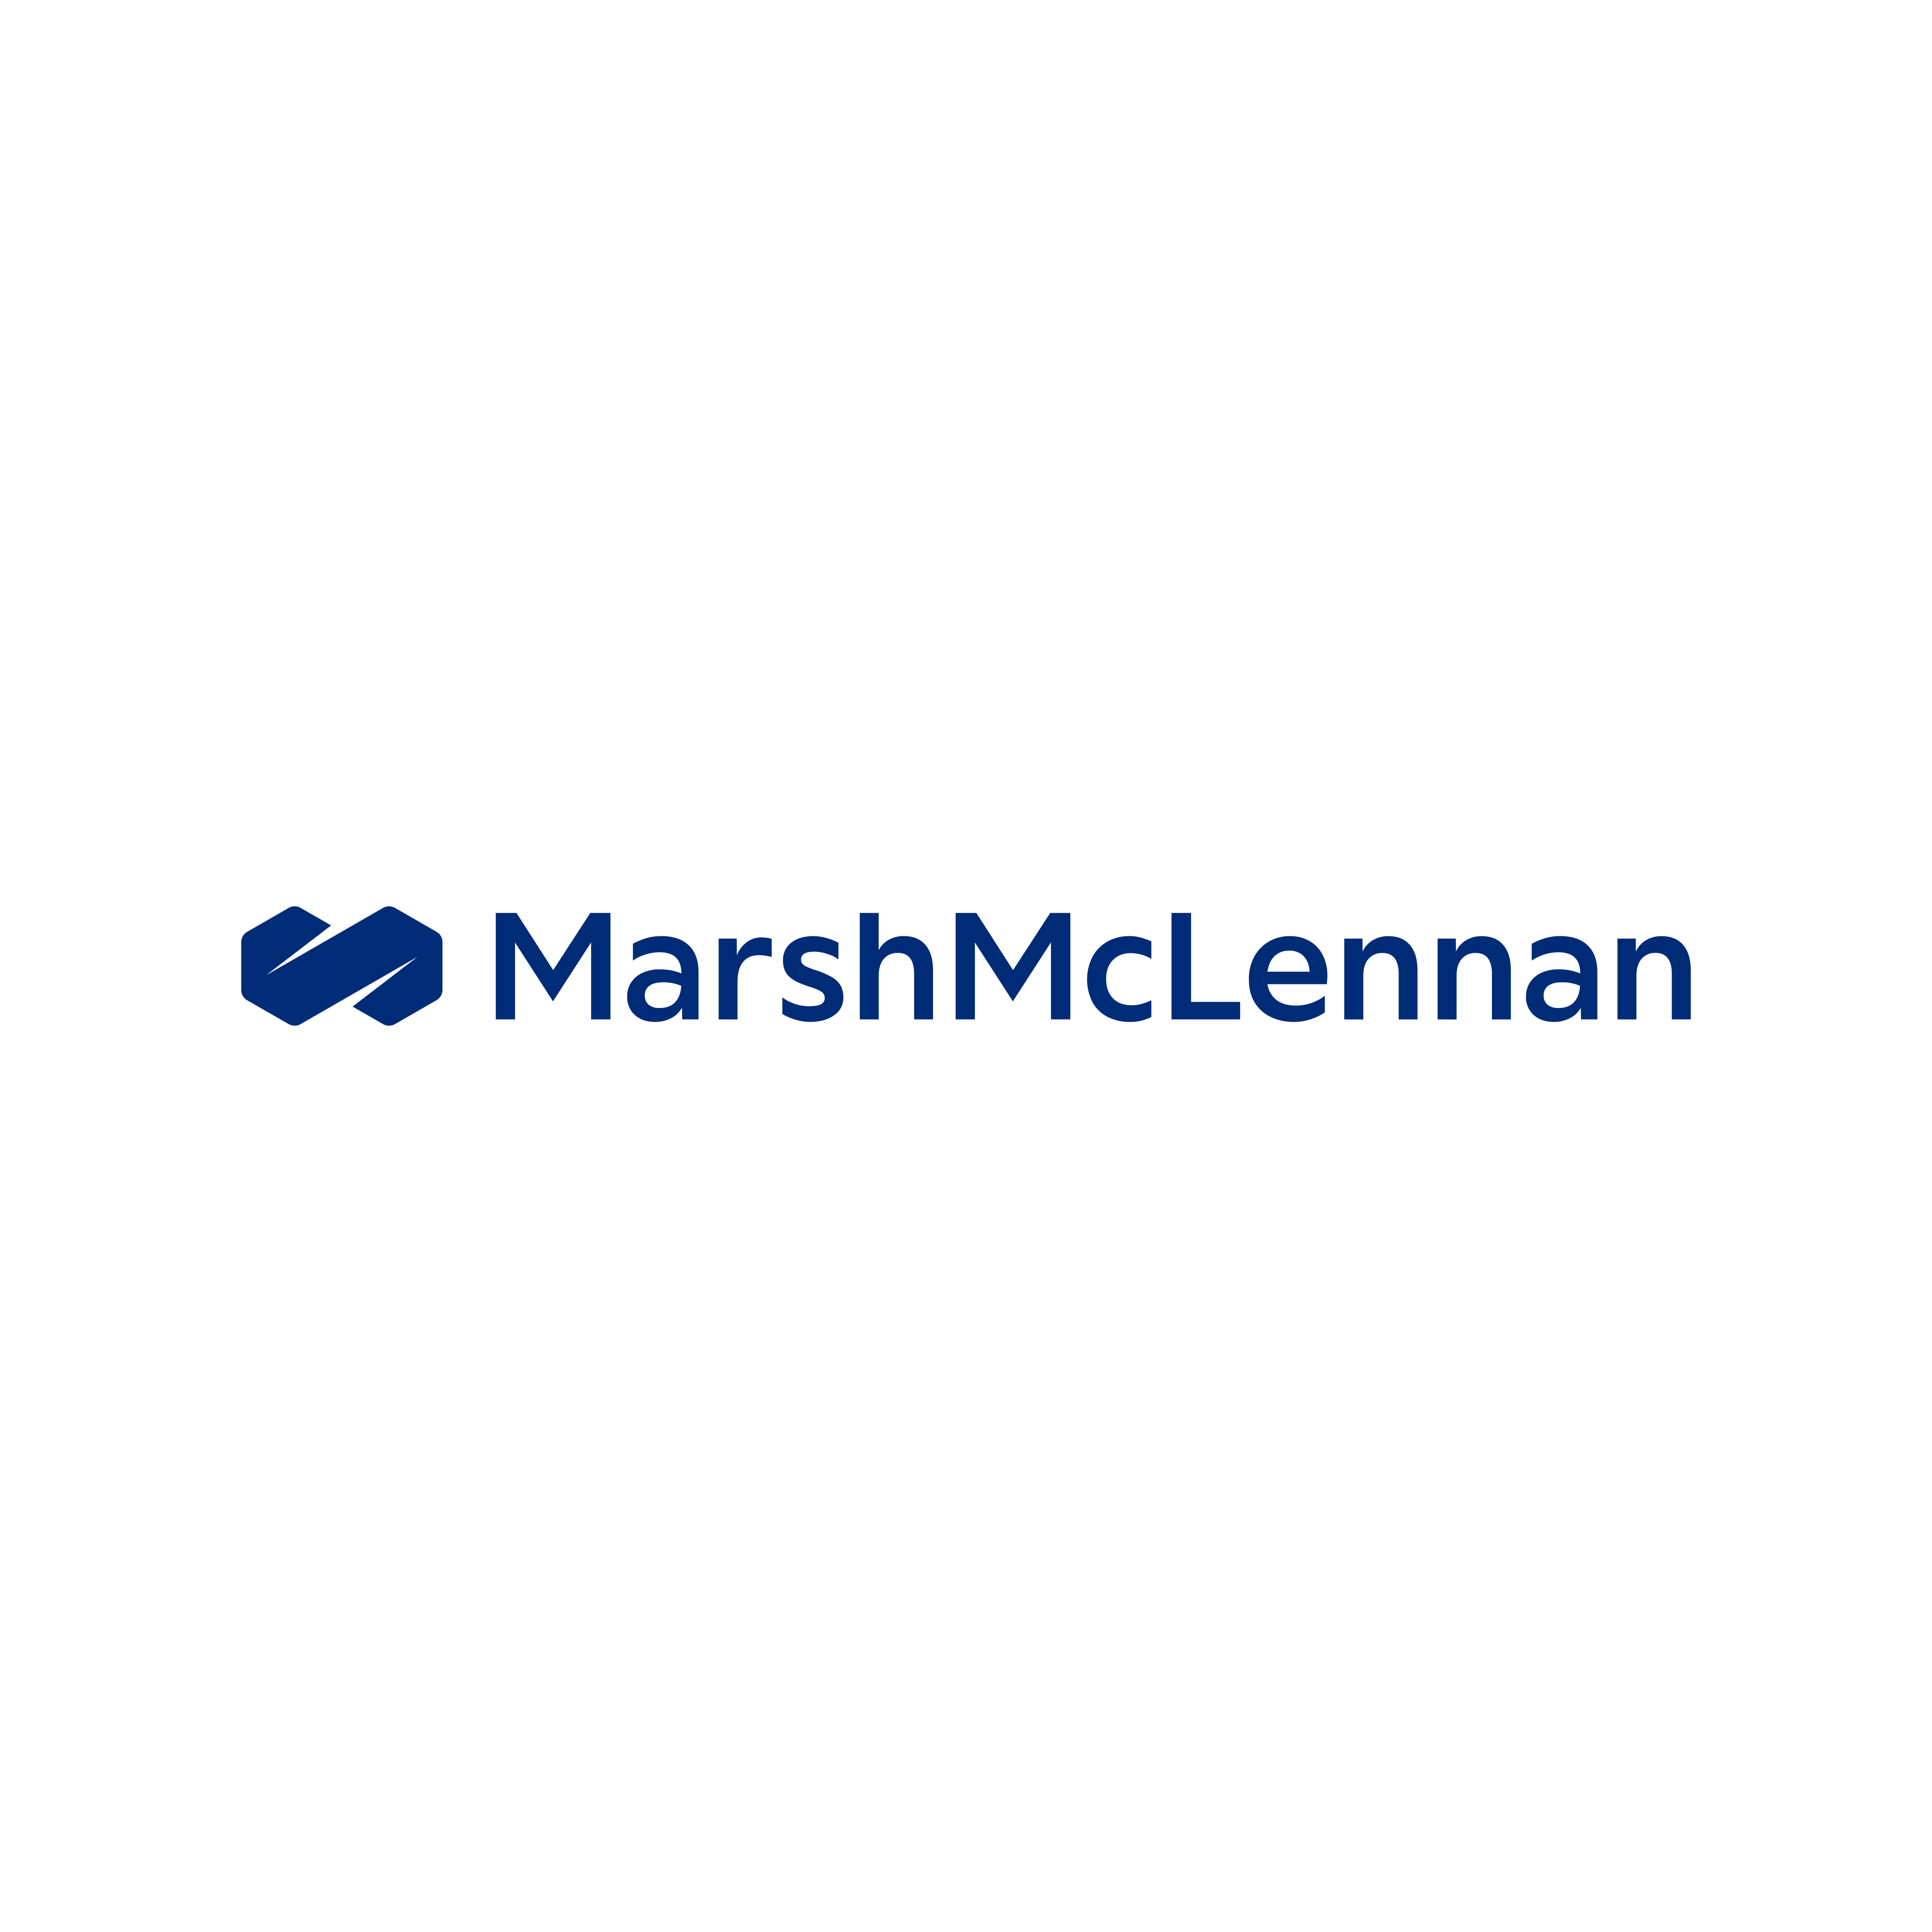 marsh mclennan logo 0 - Marsh & McLennan Logo